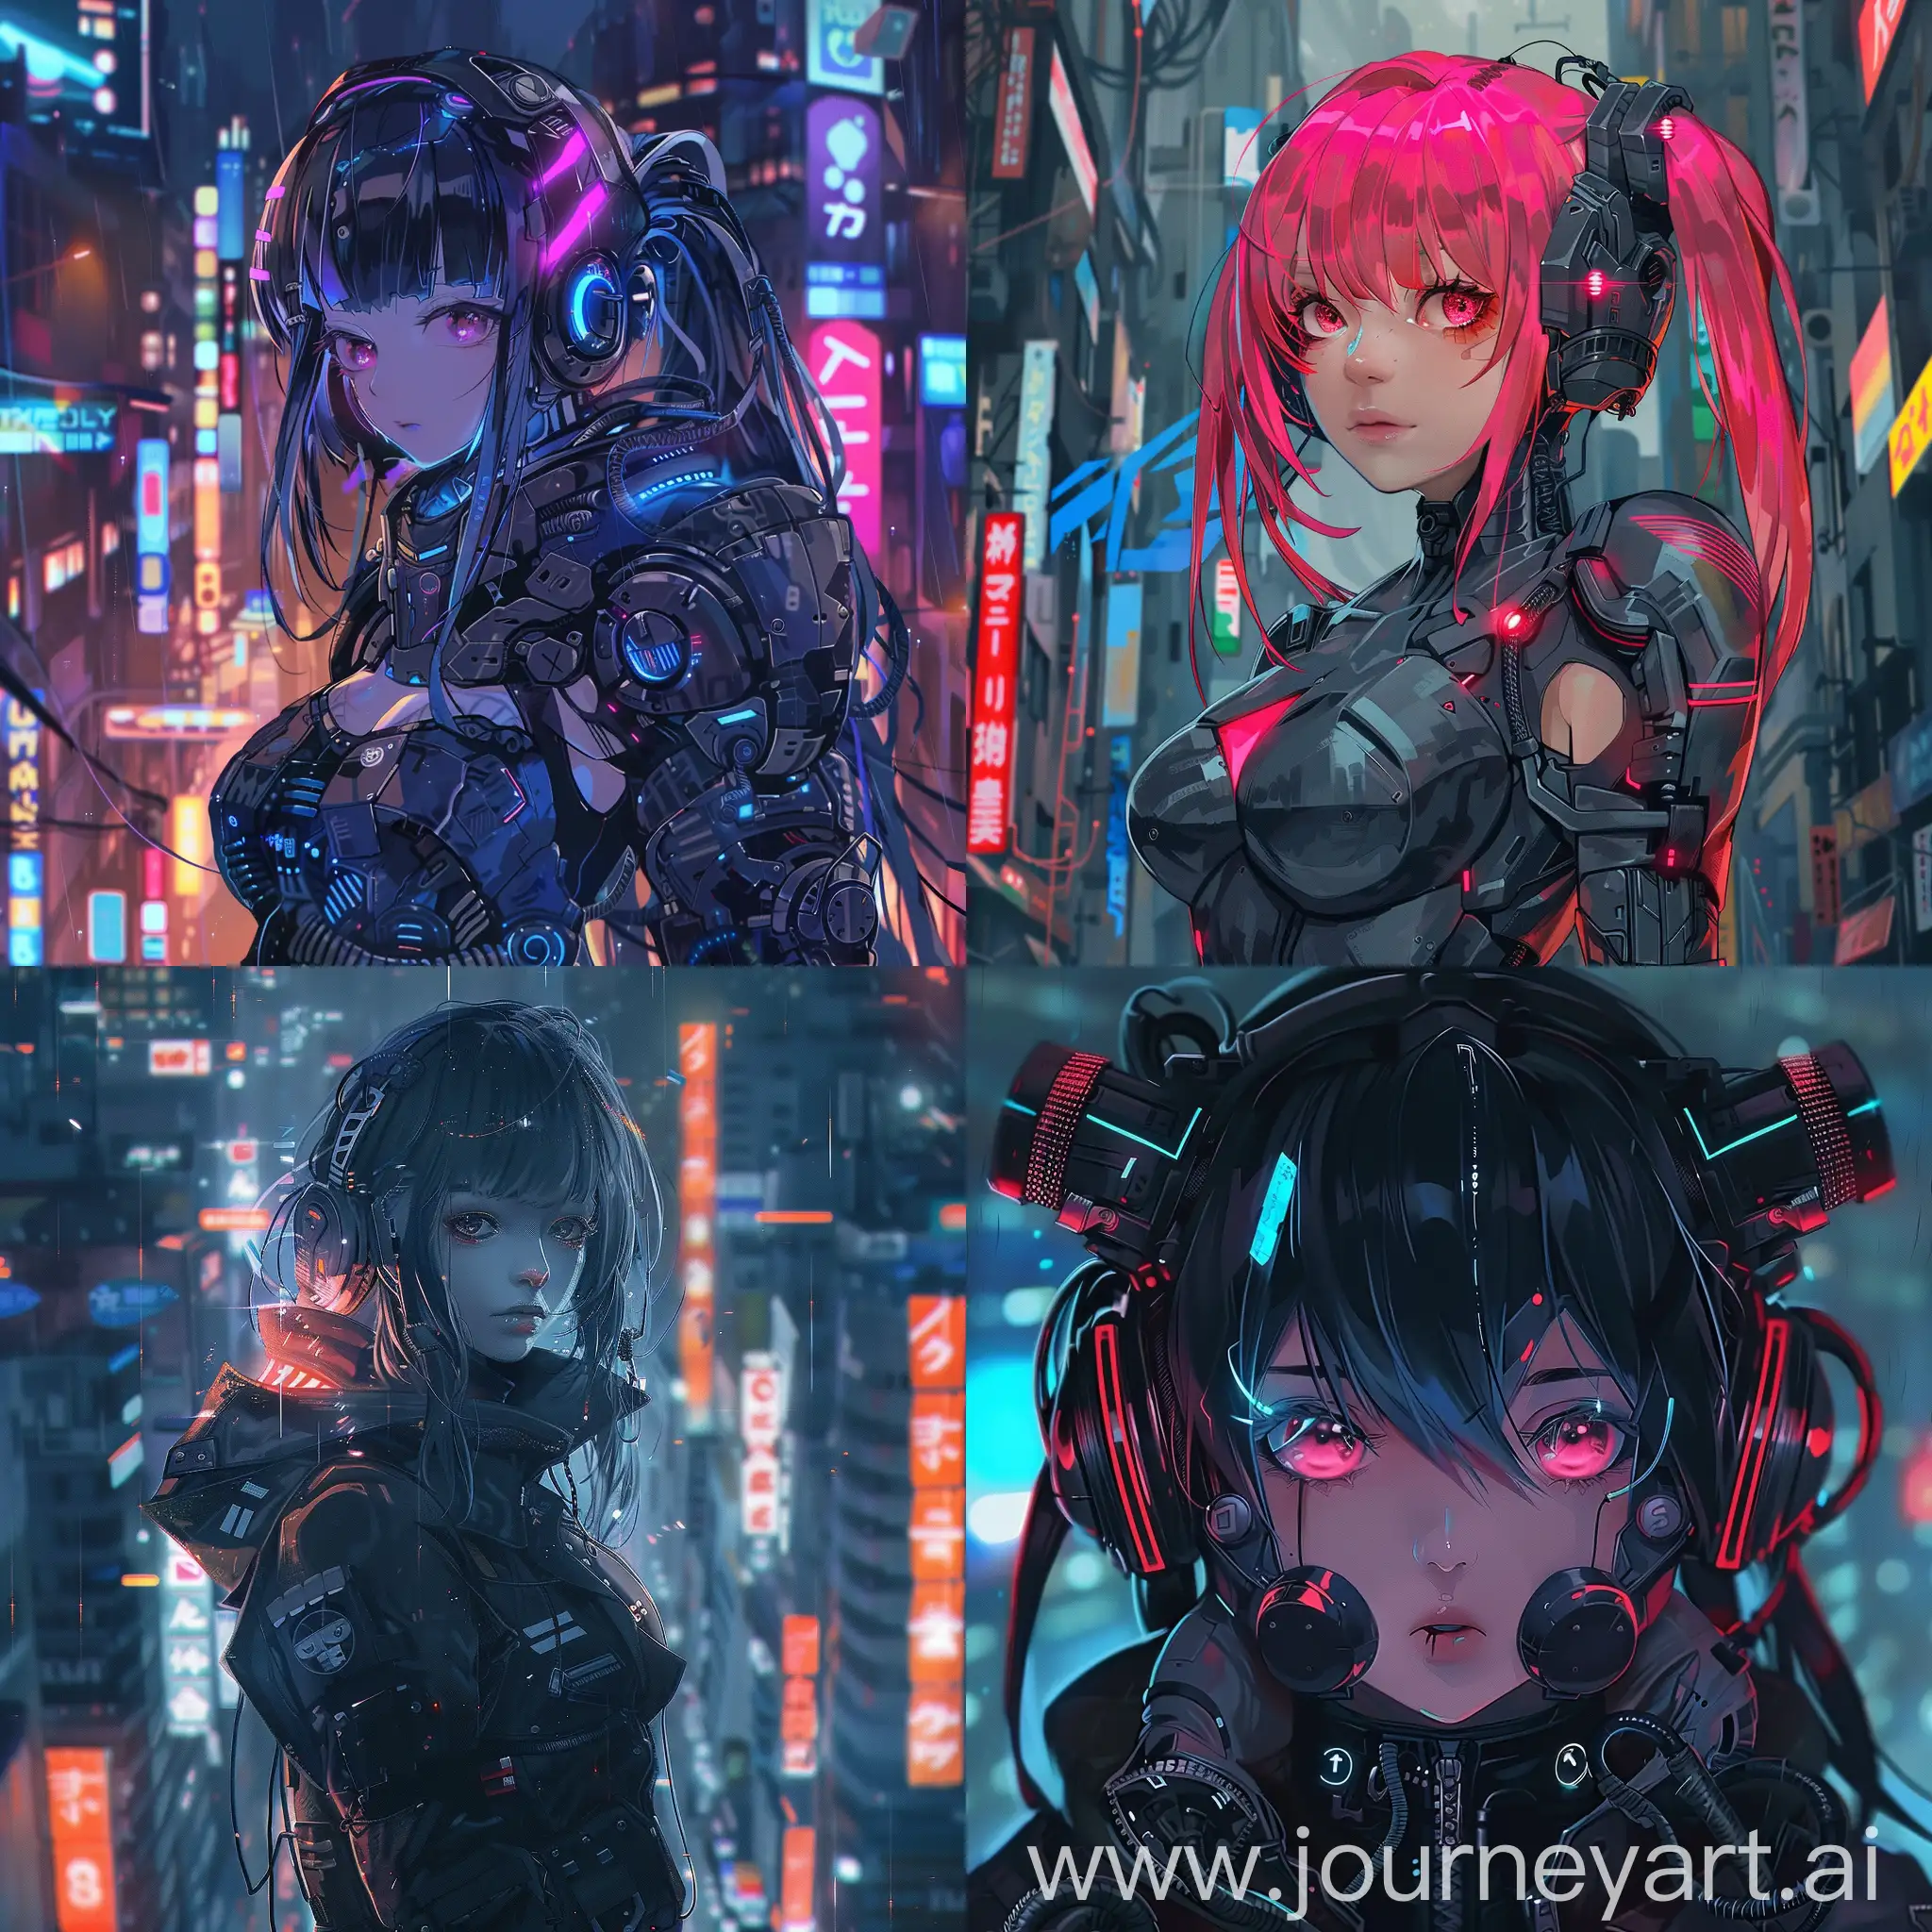 Futuristic-Cyberpunk-Anime-Girl-Portrait